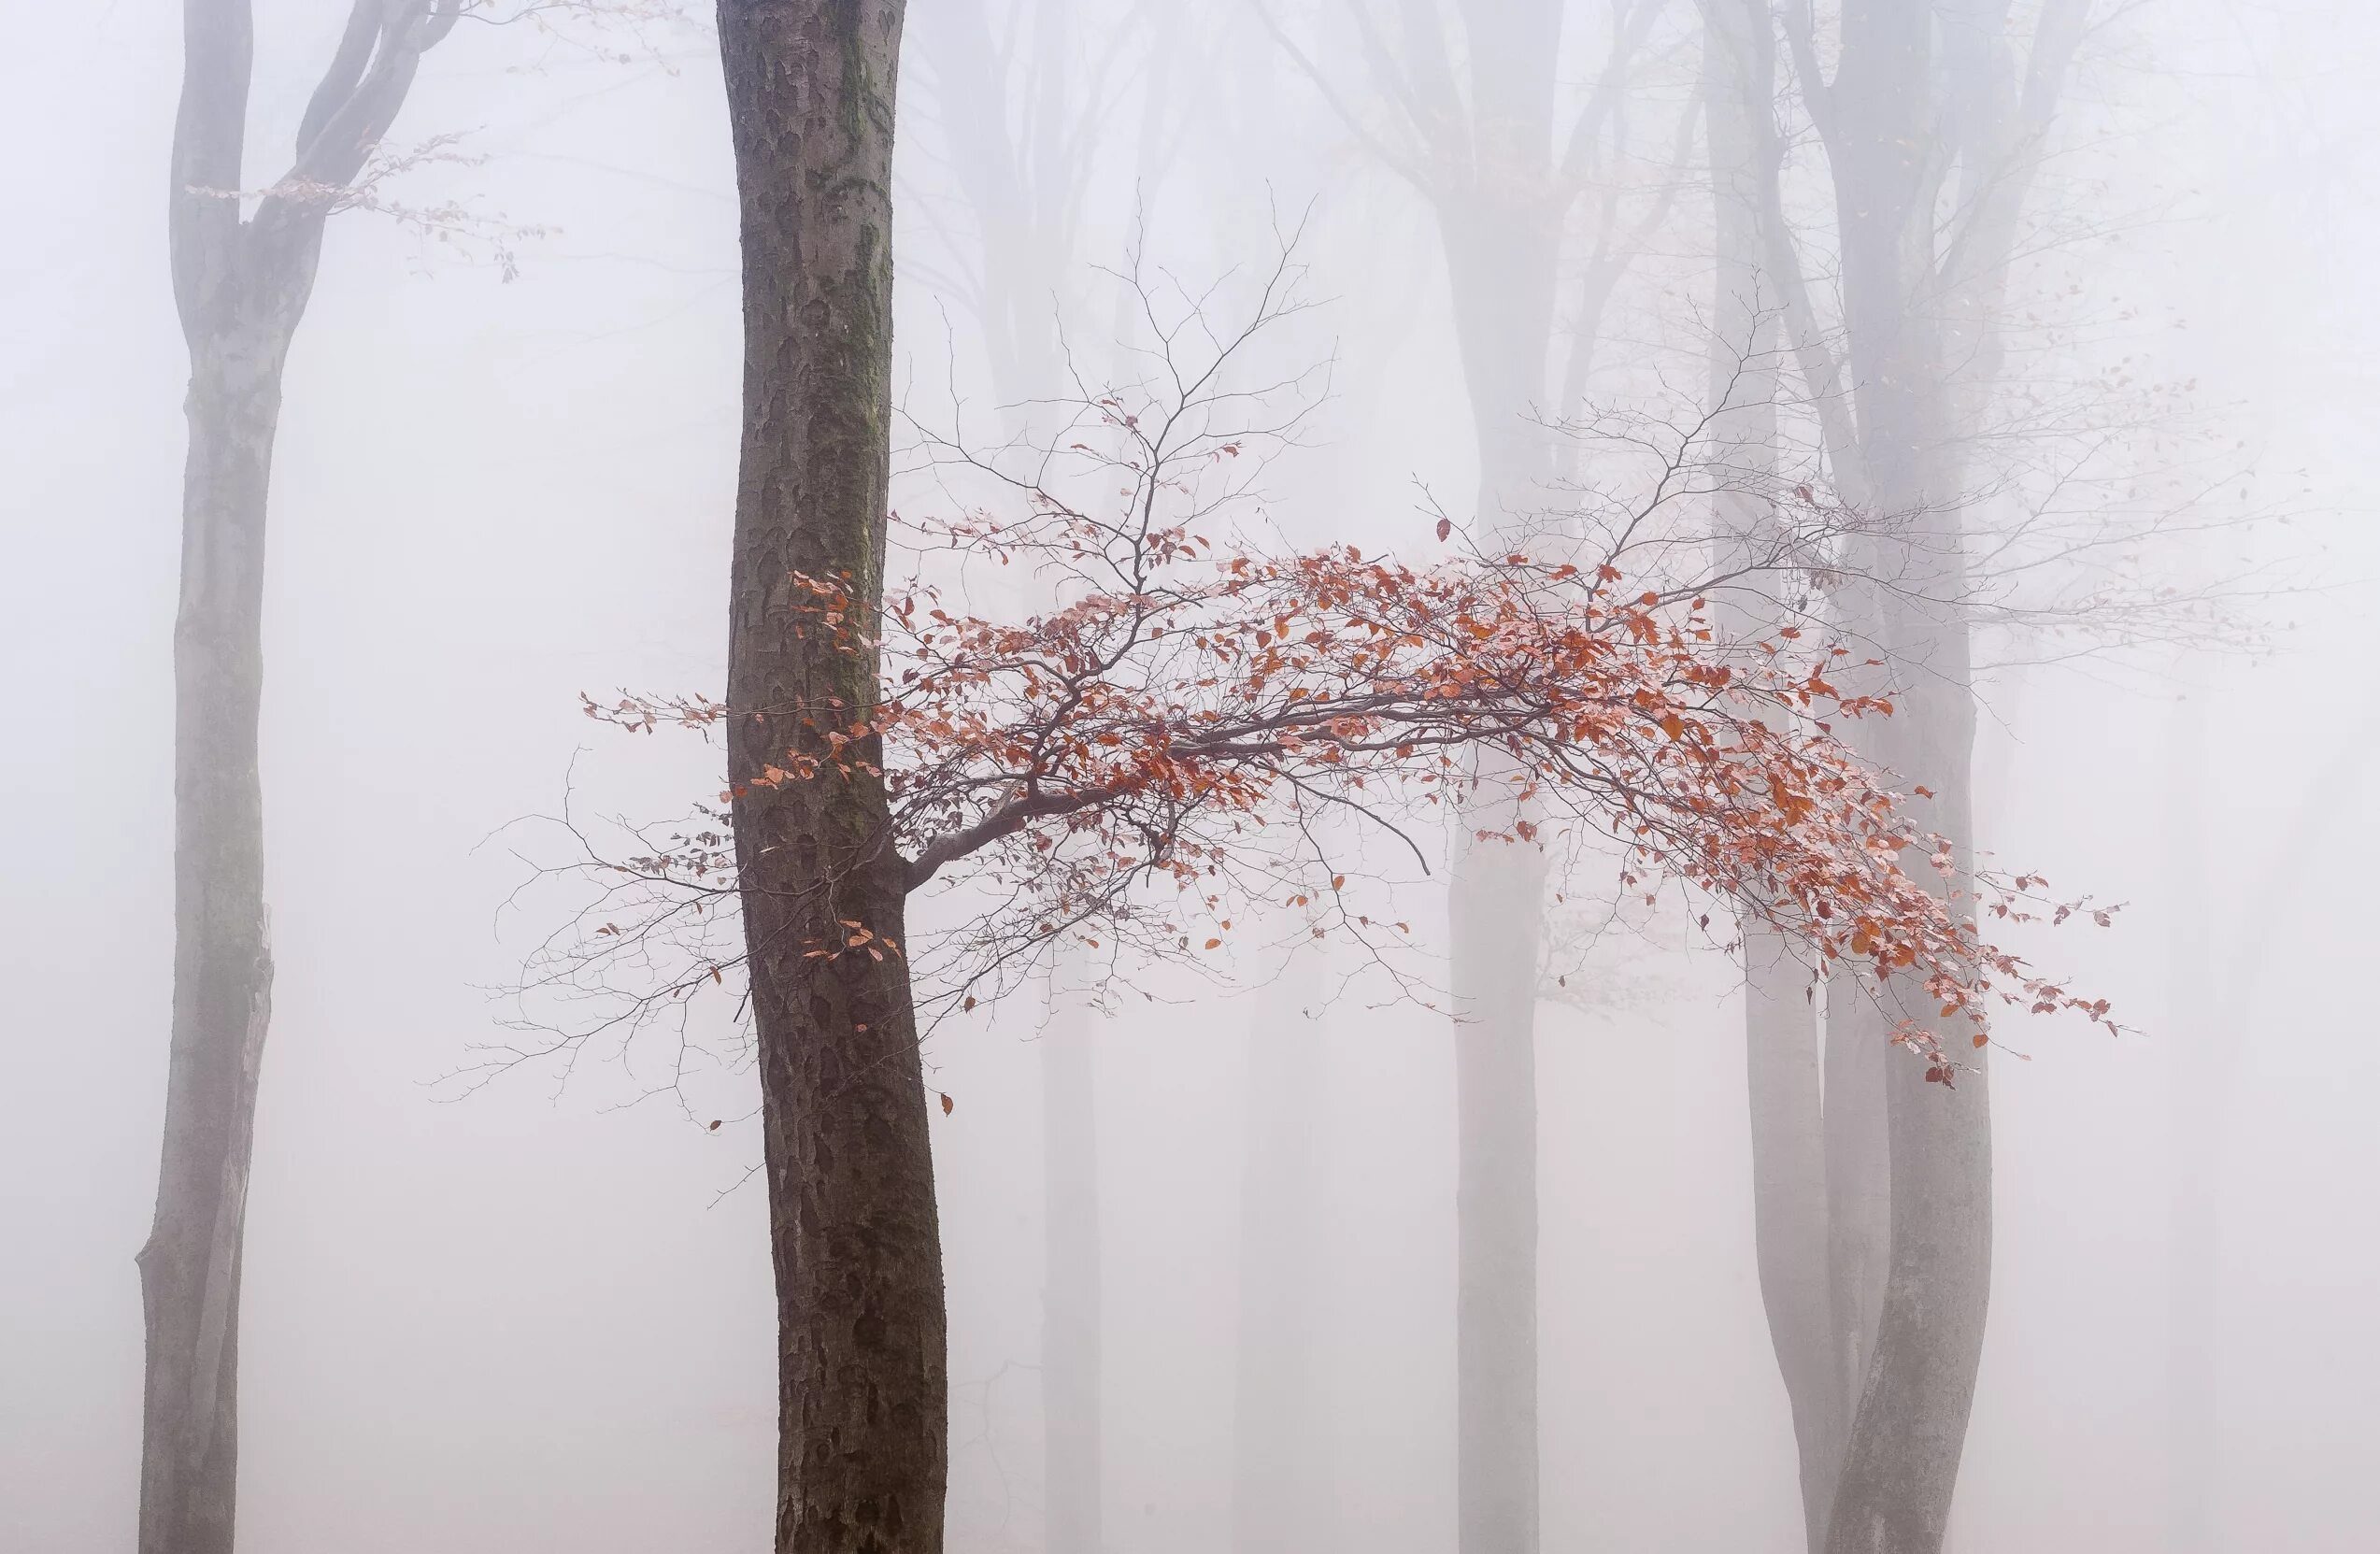 Ветвь туманного дерева. Ветки в тумане. Фреска деревья в тумане. Ветви деревьев в тумане. Осенние деревья в тумане.